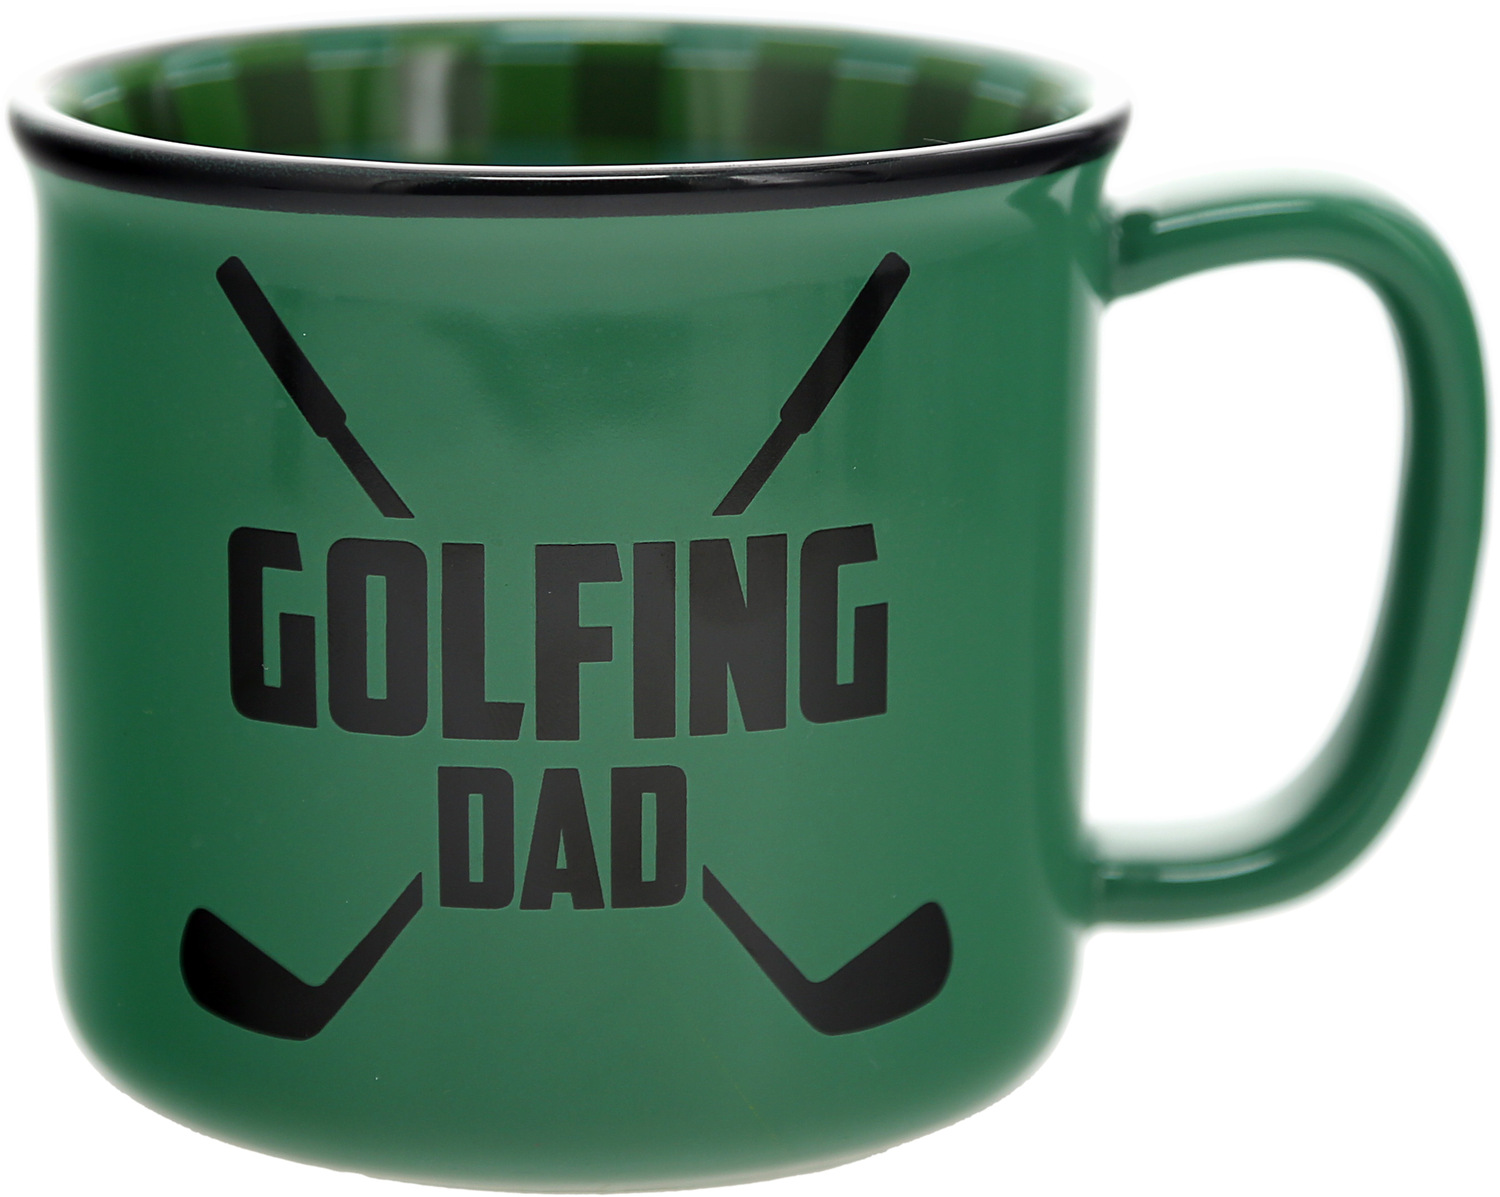 Golfing Dad by Man Out - Golfing Dad - 18 oz Mug